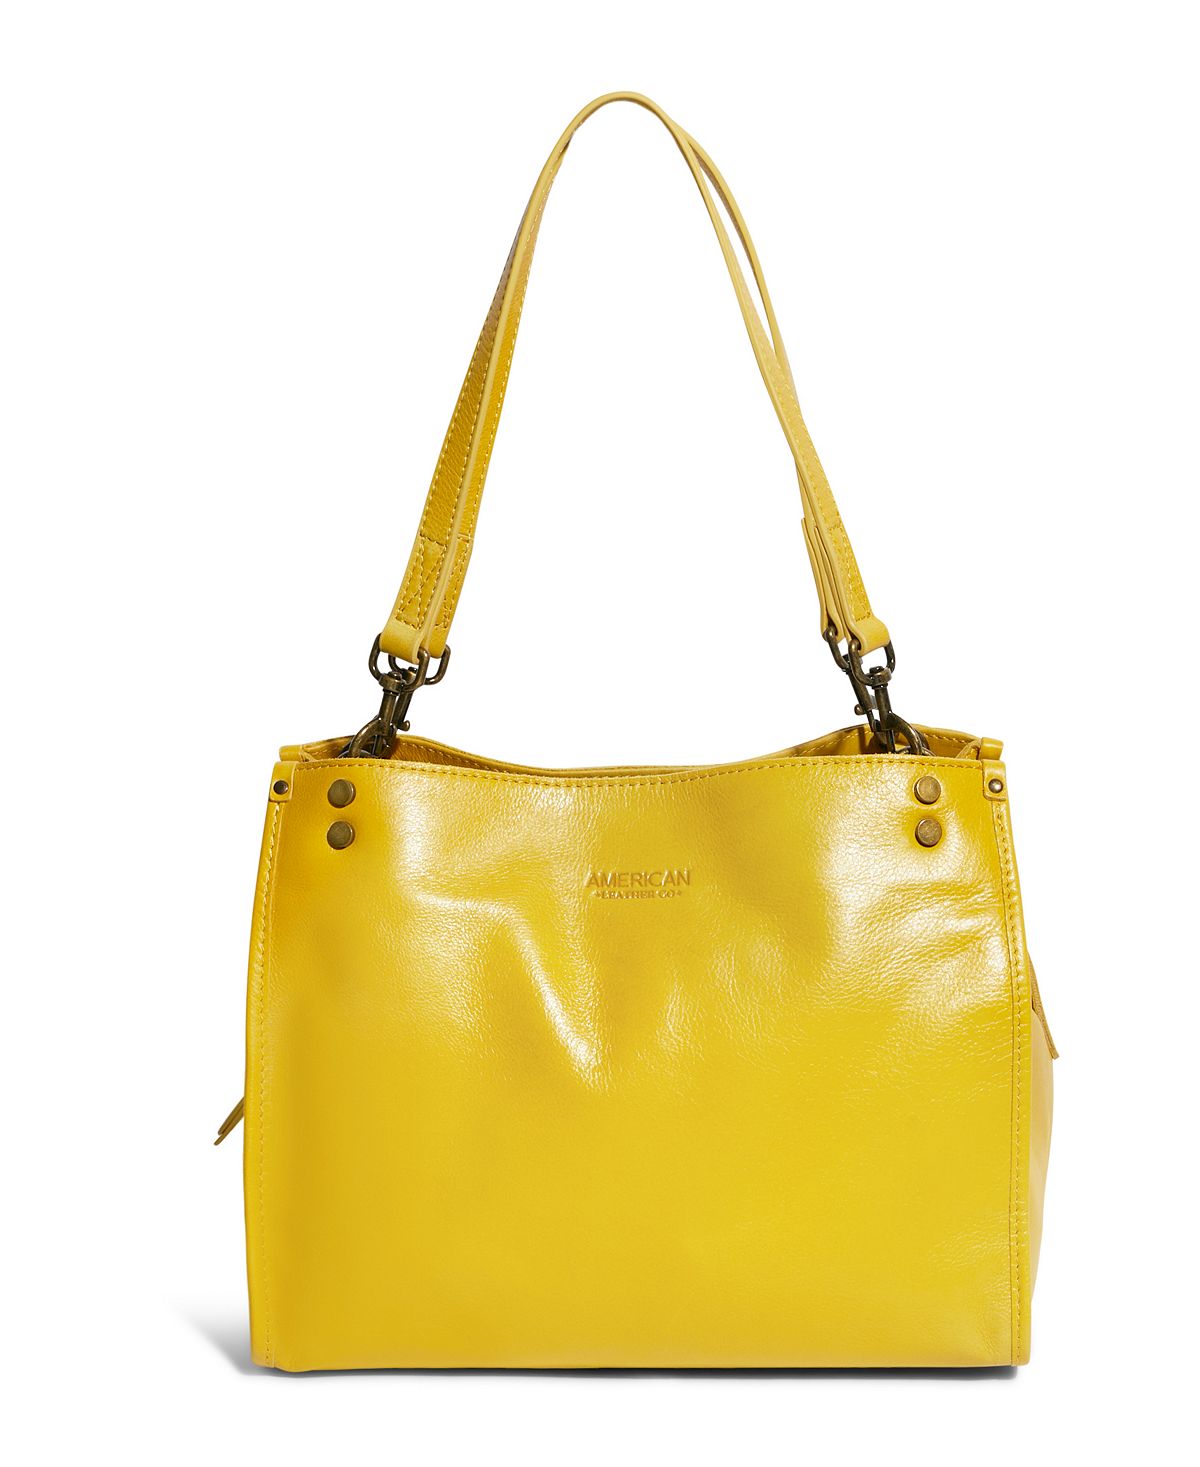 Женская сумка-саквояж Lenox с тройным входом American Leather Co. женская большая сумка hope american leather co